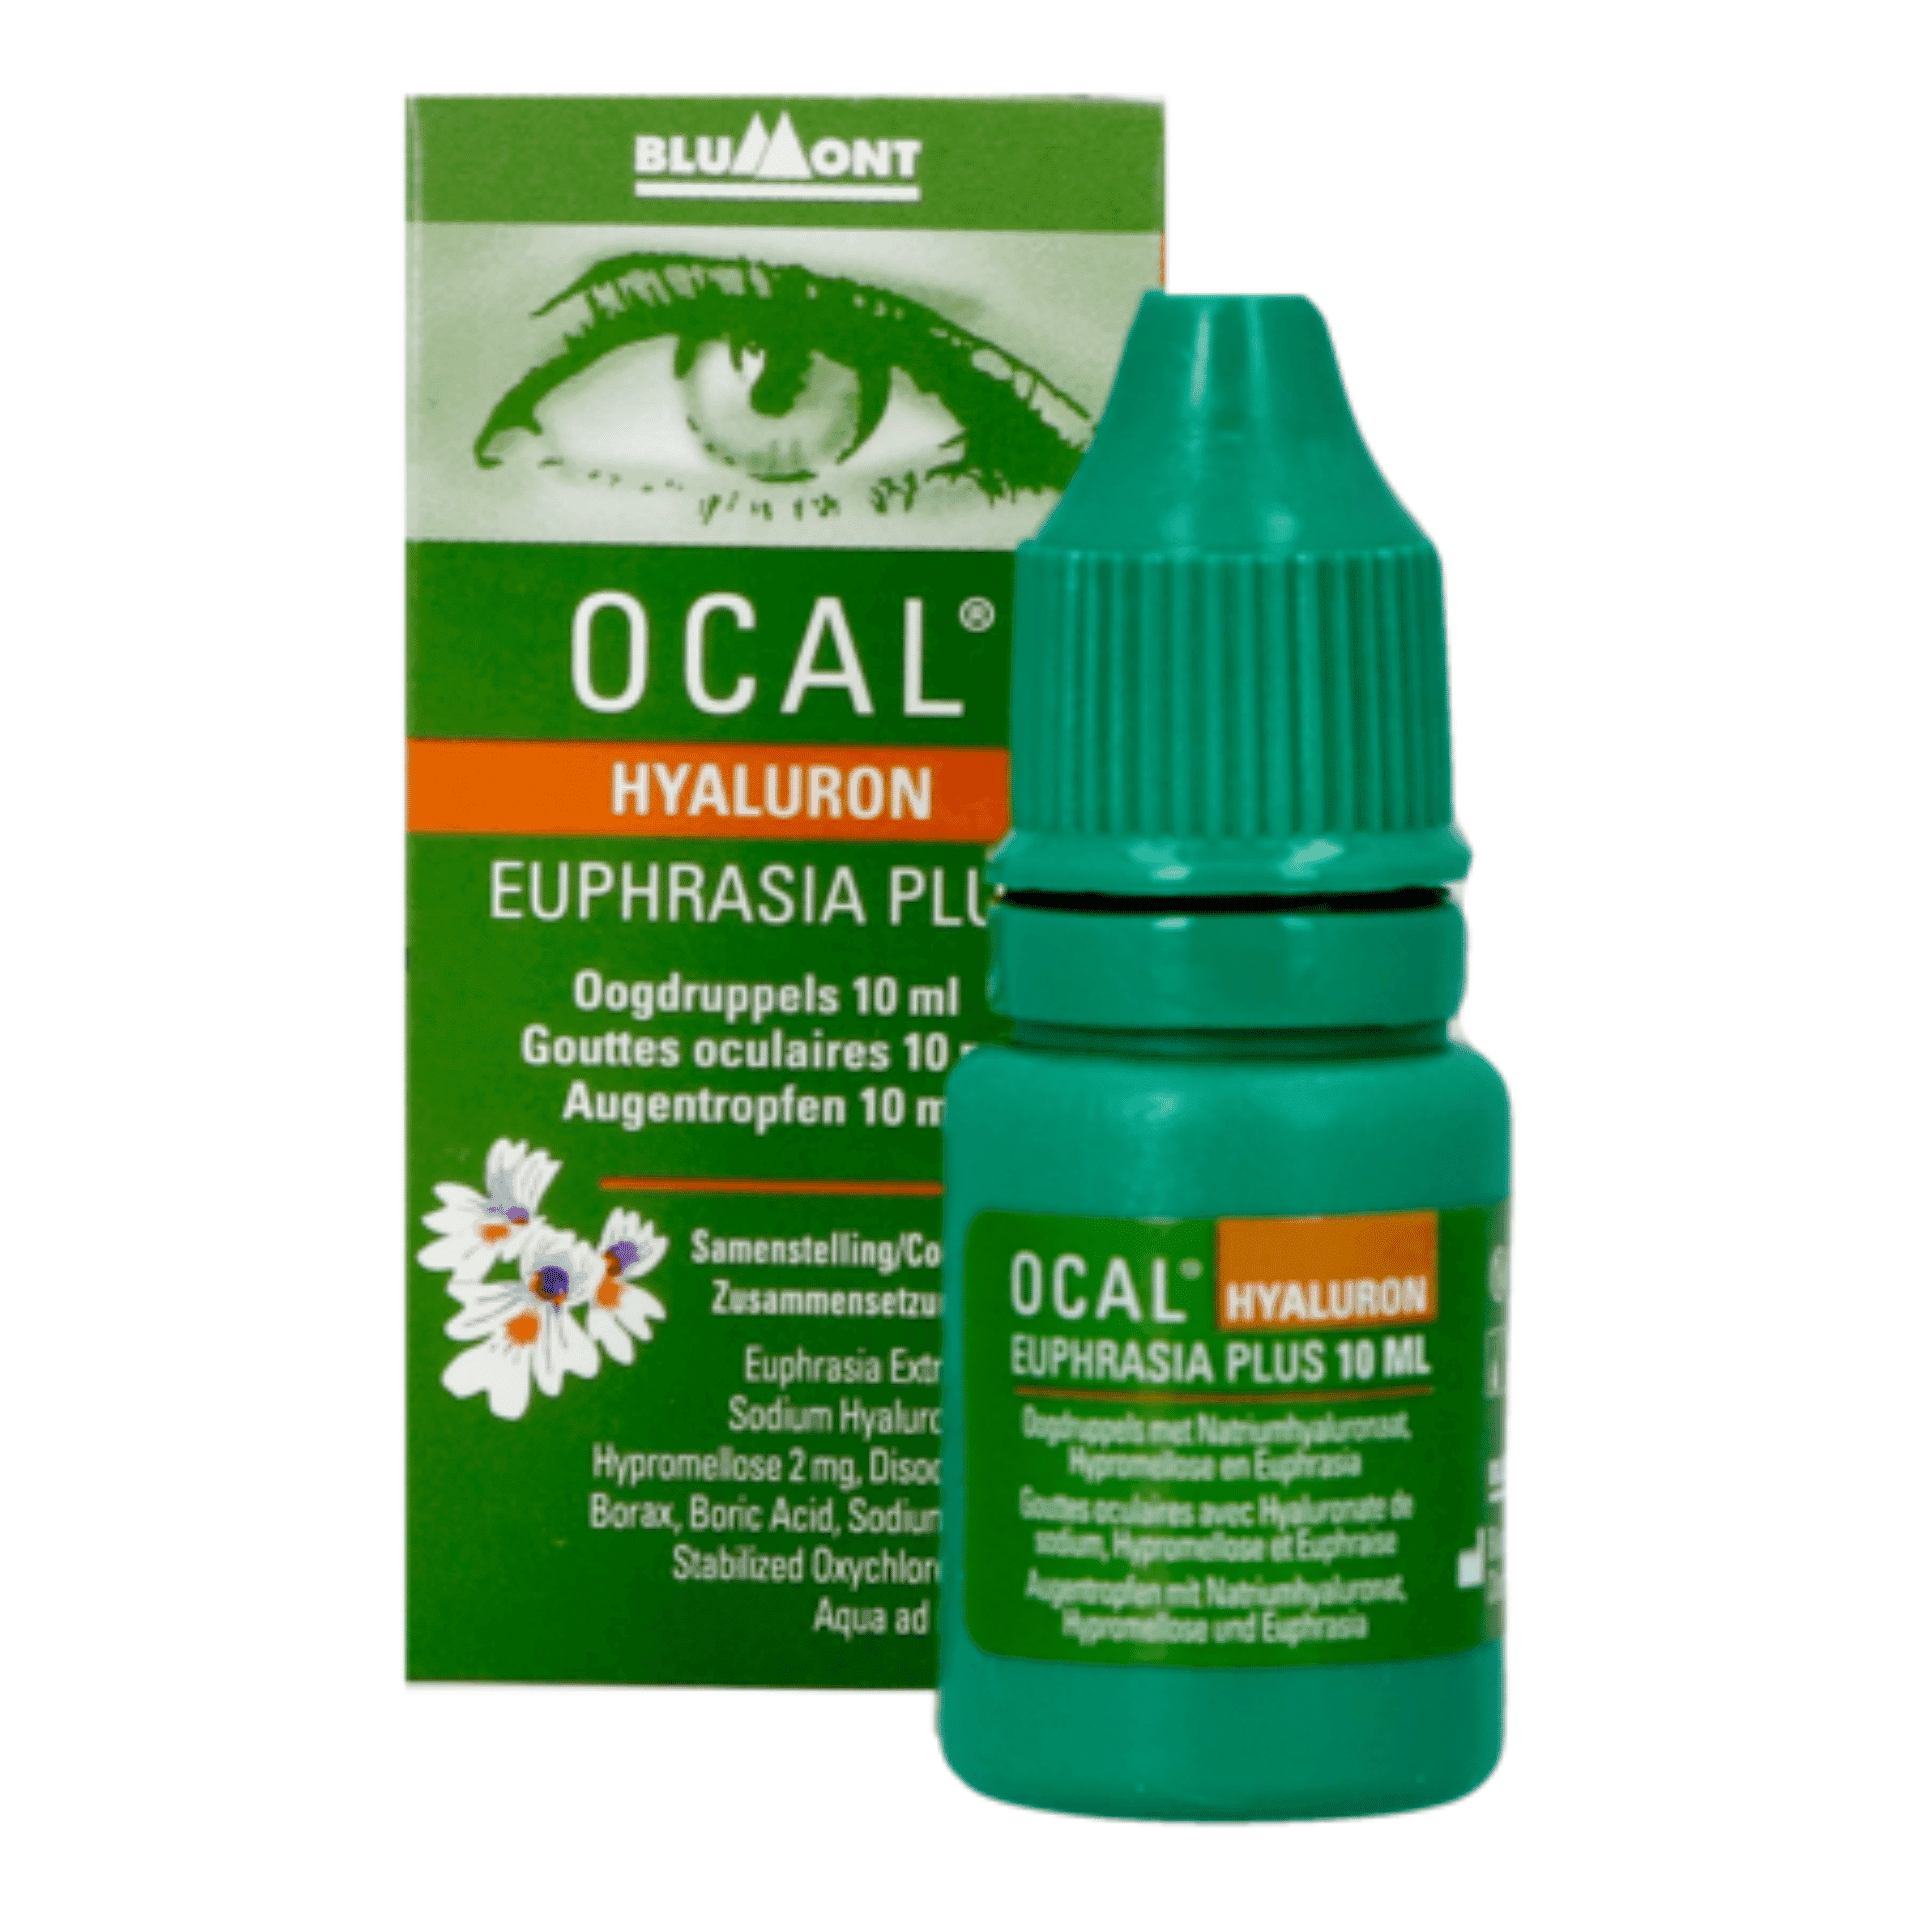 Ocal Hyaluron Euphrasie Plus 10 ml